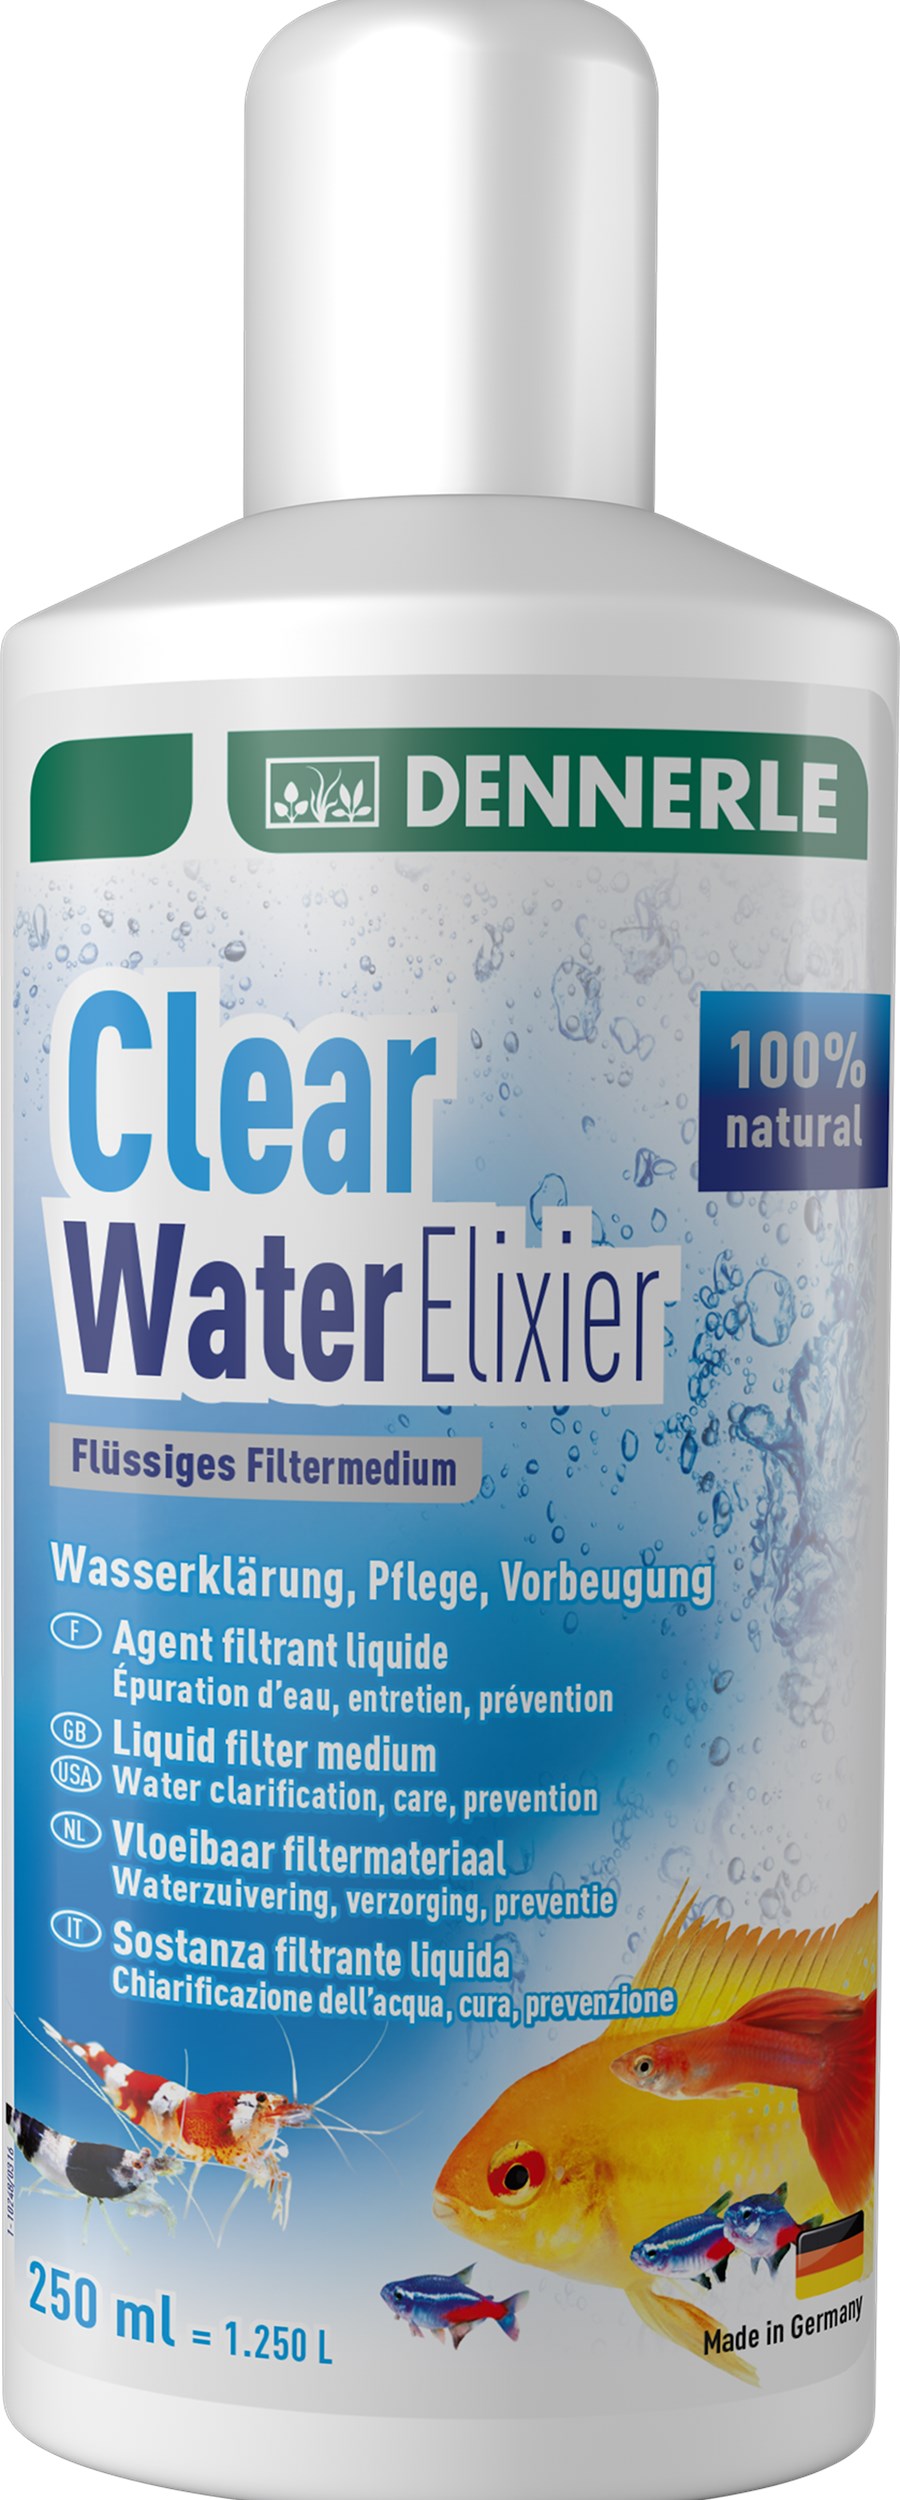 Clear Water Elixier 500 ml